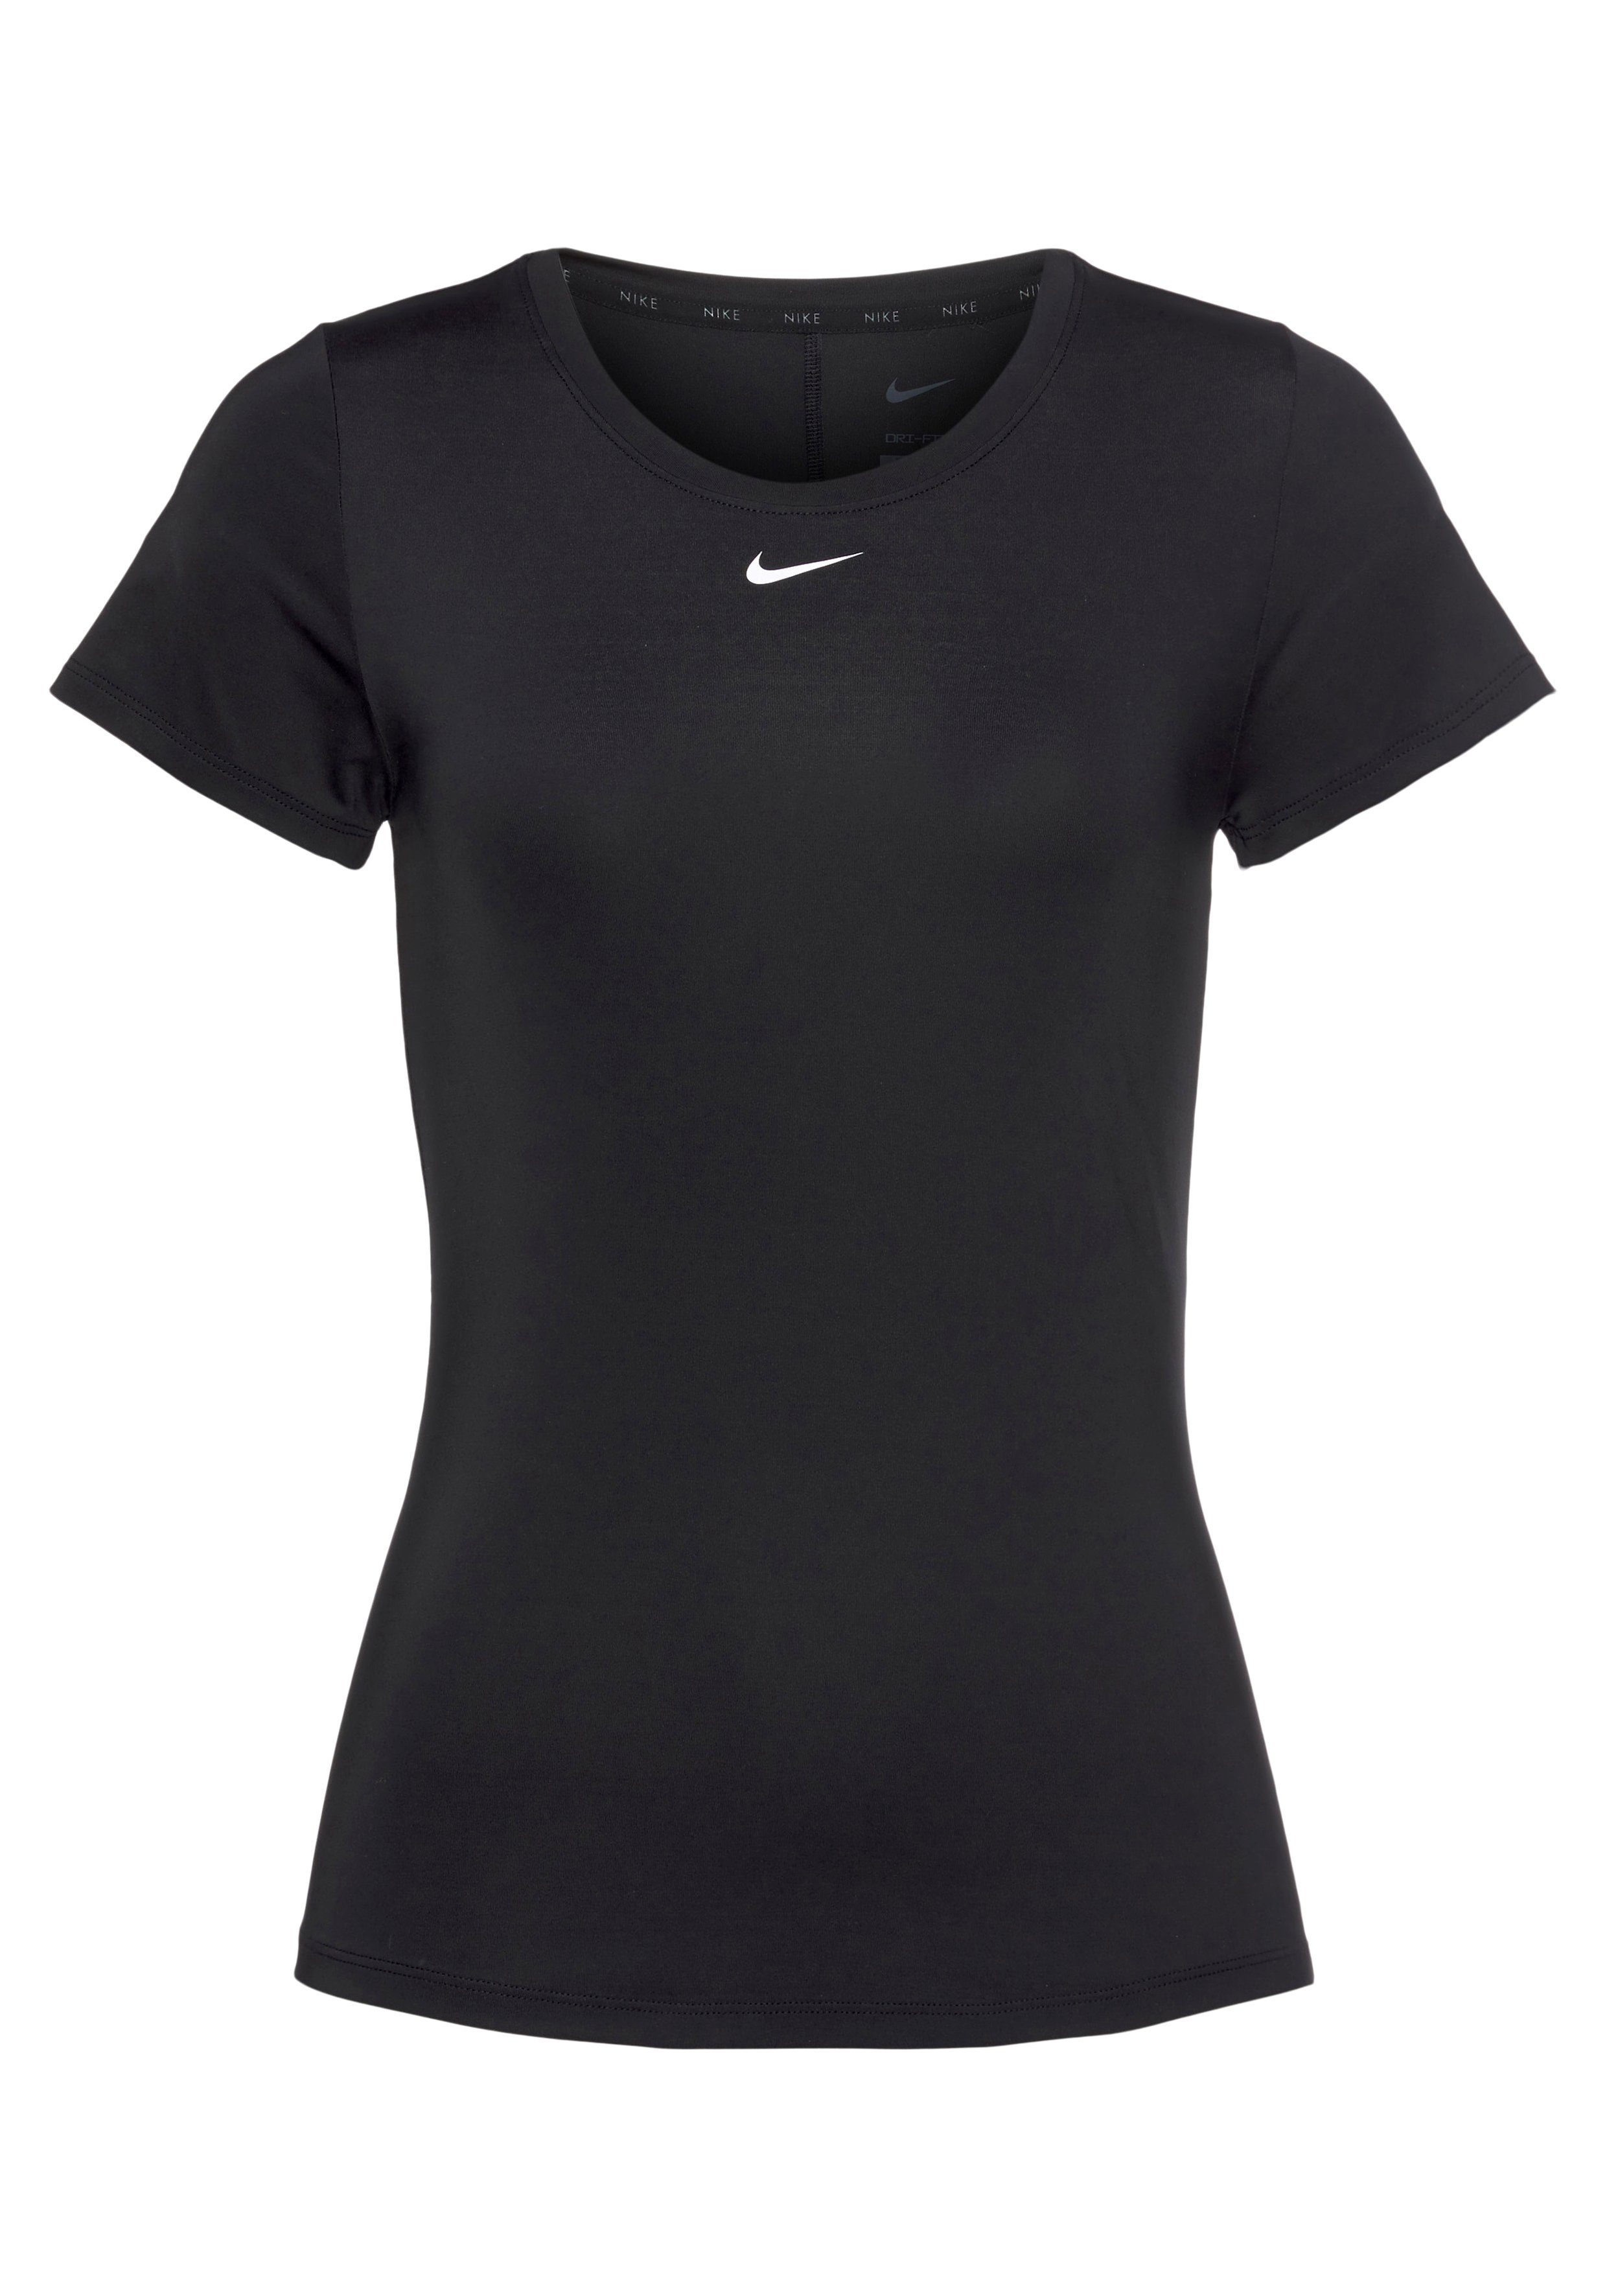 Nike DRI-FIT TOP SLIM FIT schwarz Trainingsshirt ONE WOMEN'S SHORT-SLEEVE